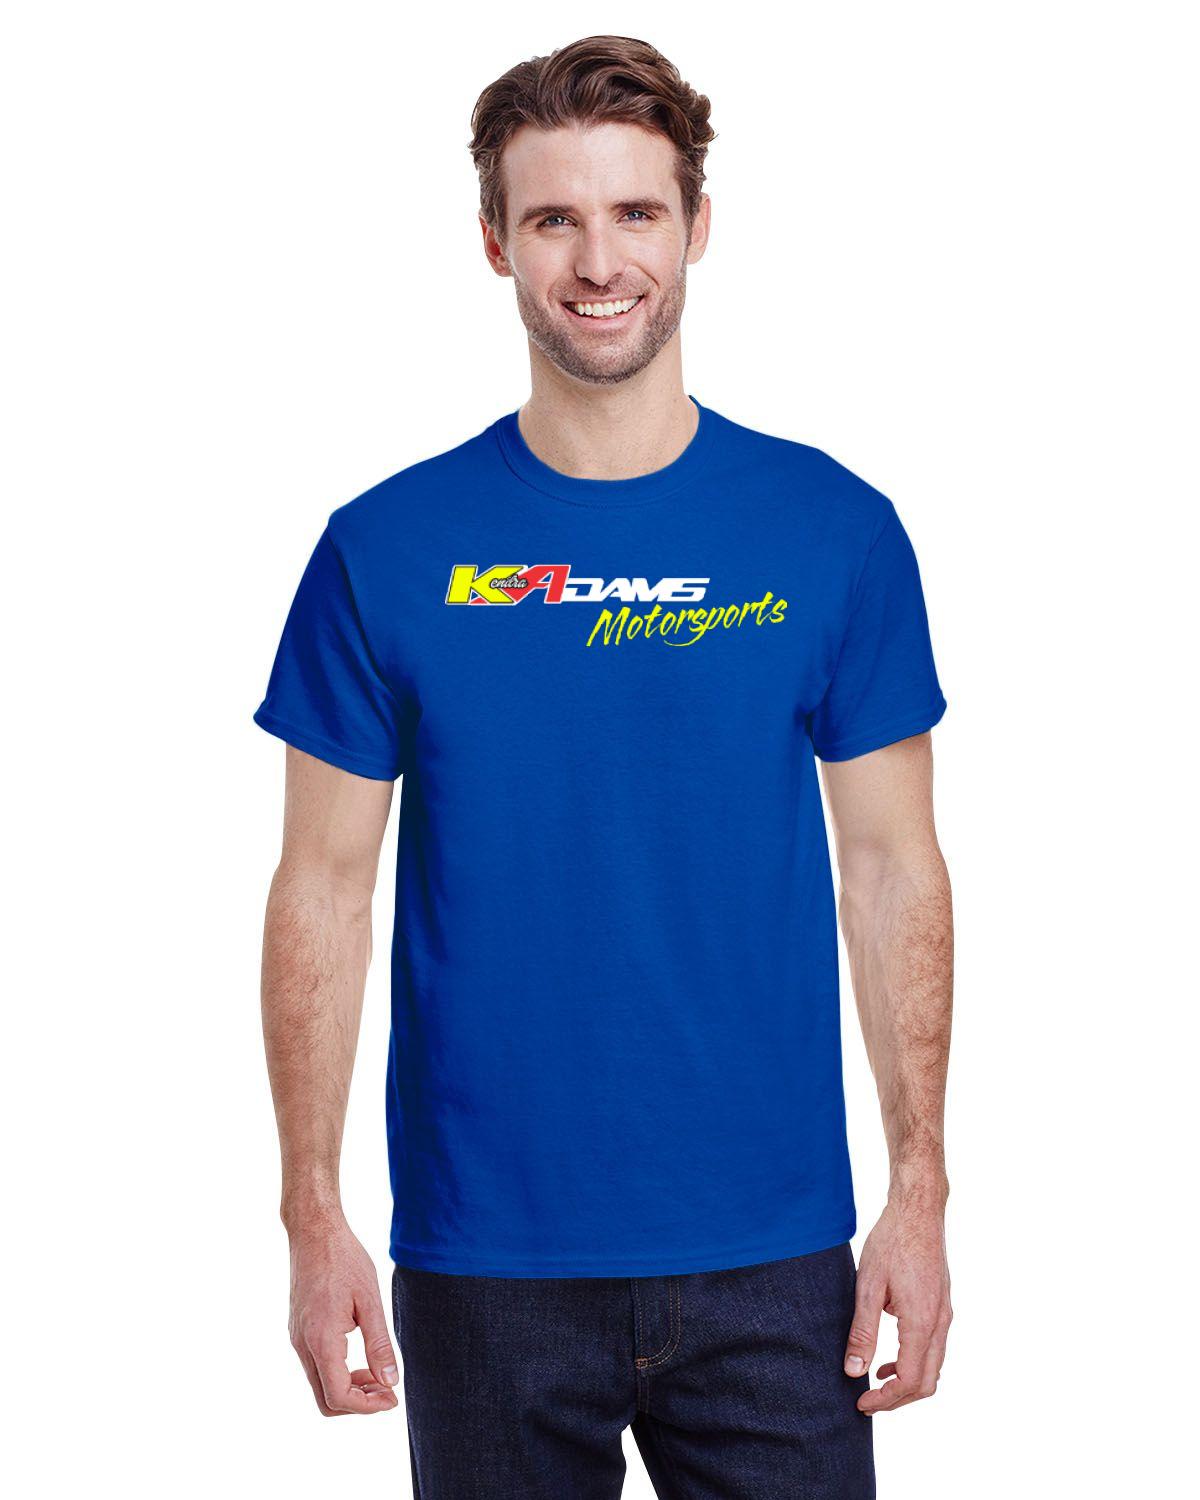 Kendra Adams Motorsports Men's Tshirt